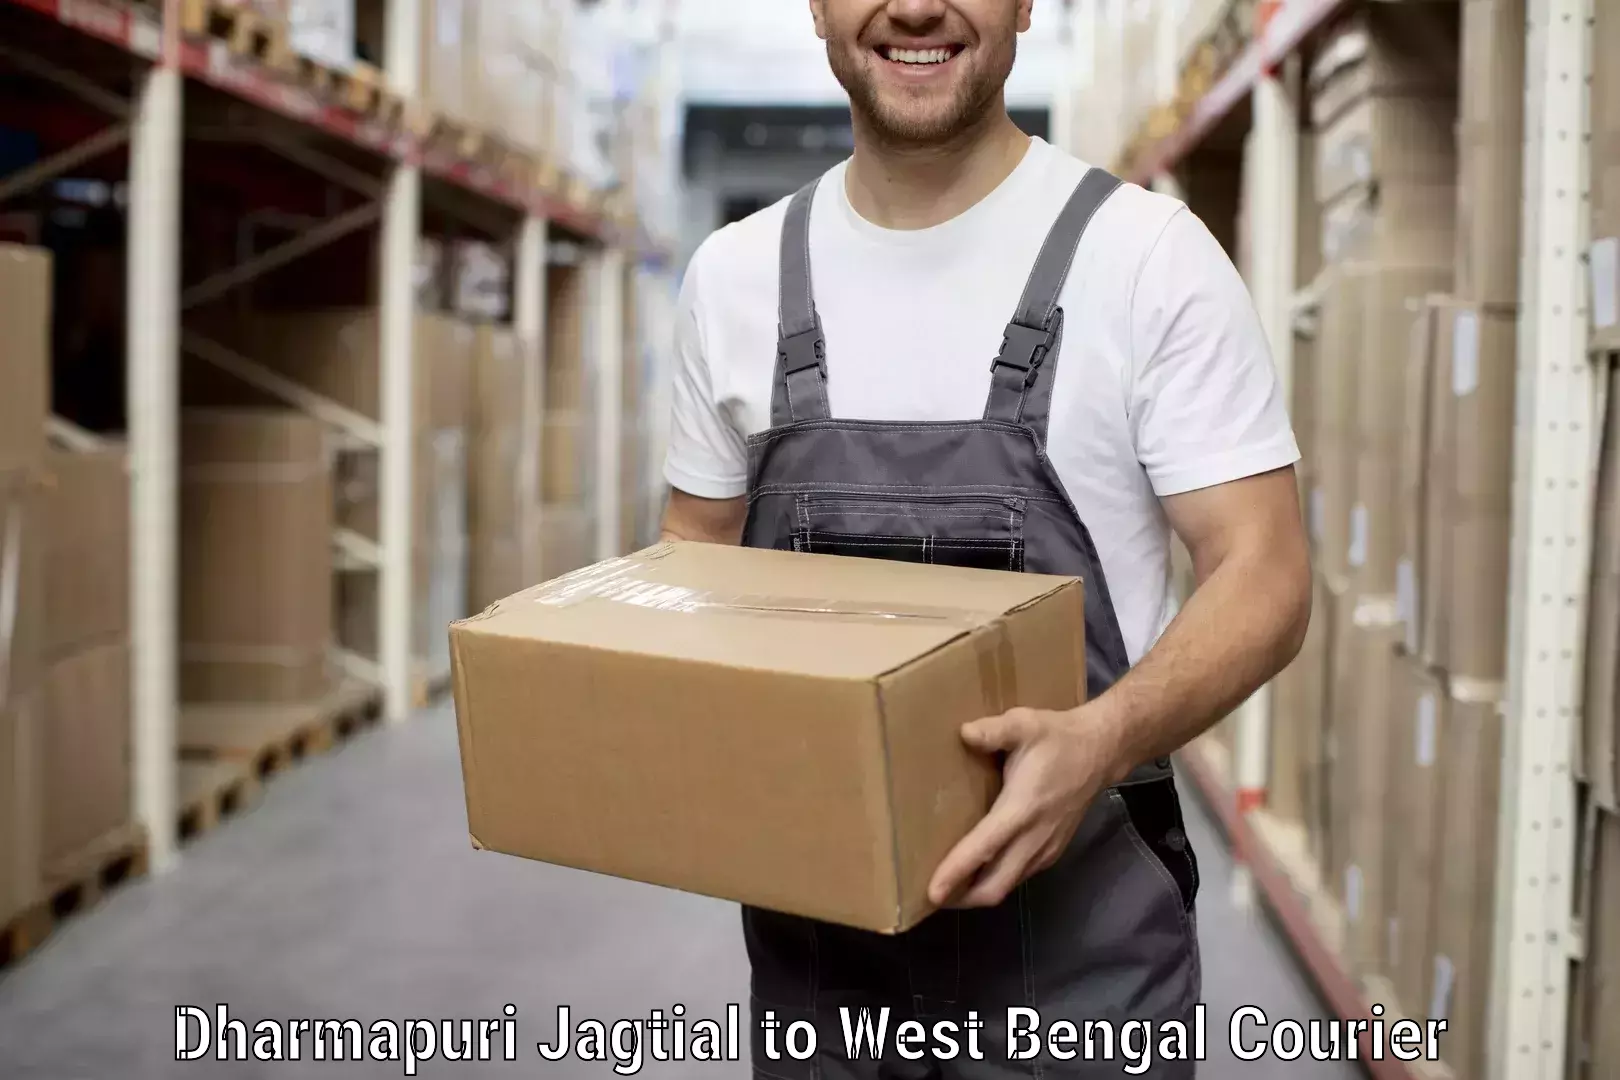 Furniture delivery service Dharmapuri Jagtial to Udaynarayanpur